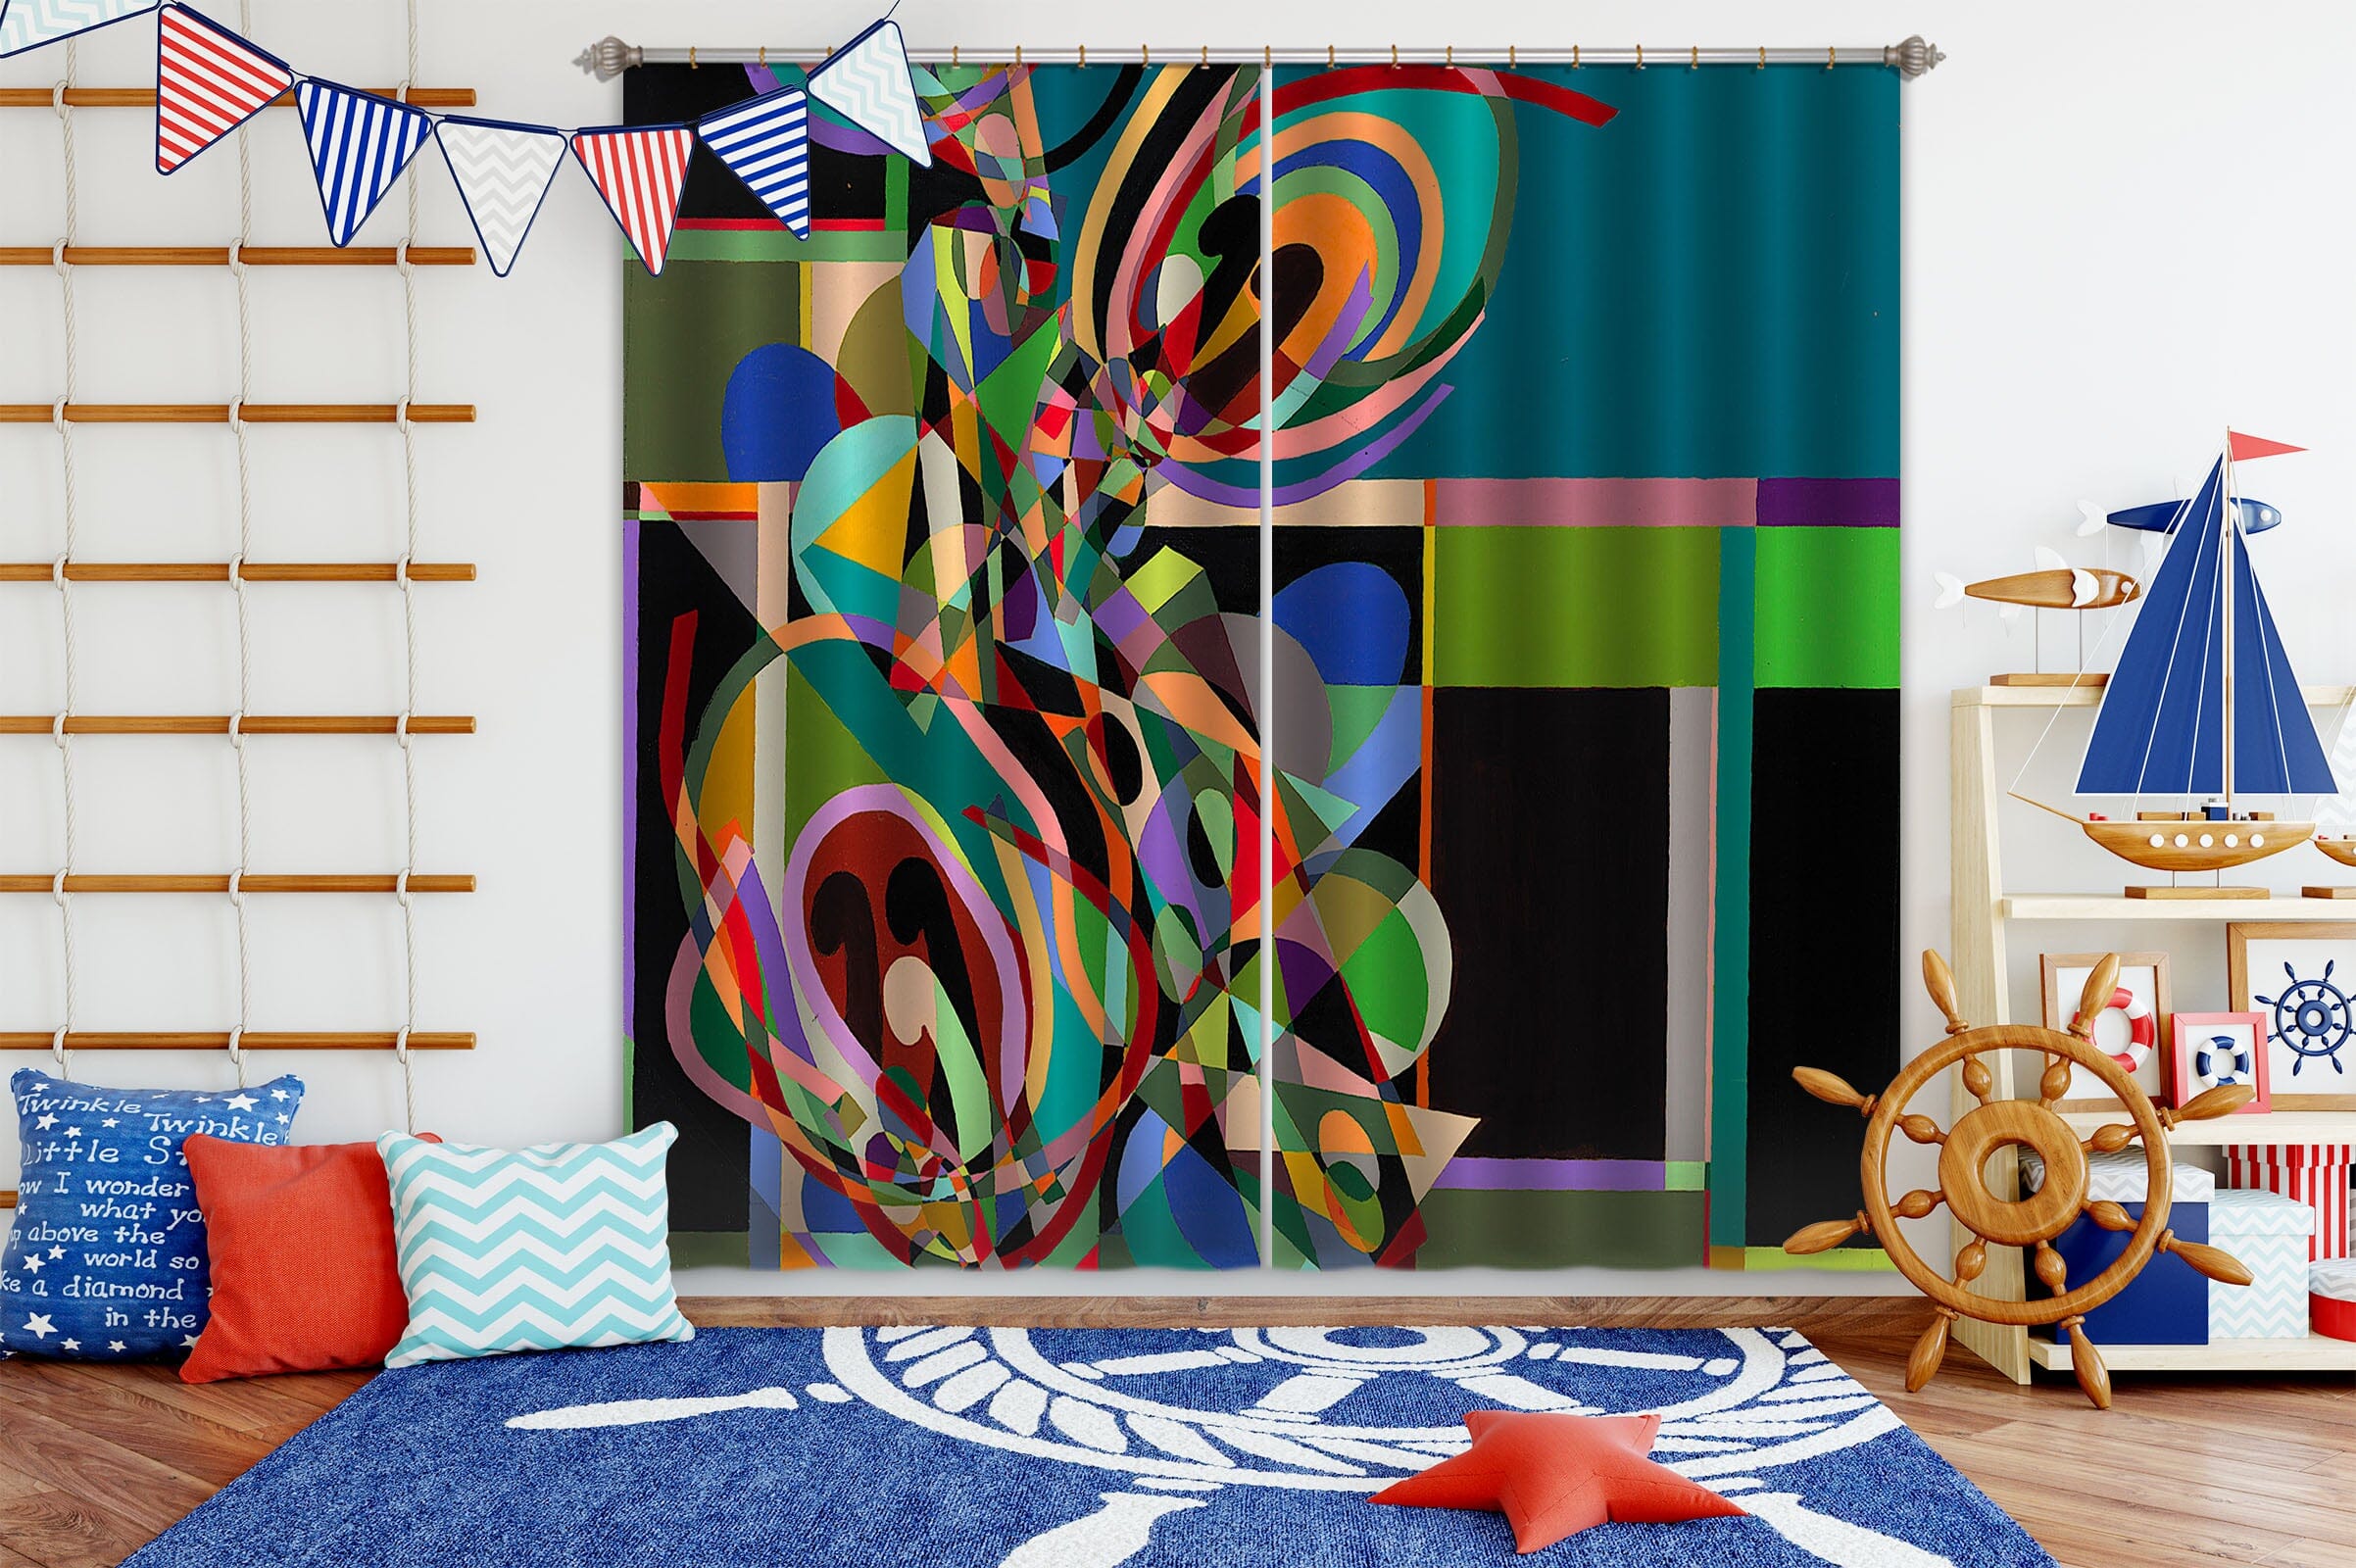 3D Color Origami 222 Allan P. Friedlander Curtain Curtains Drapes Curtains AJ Creativity Home 